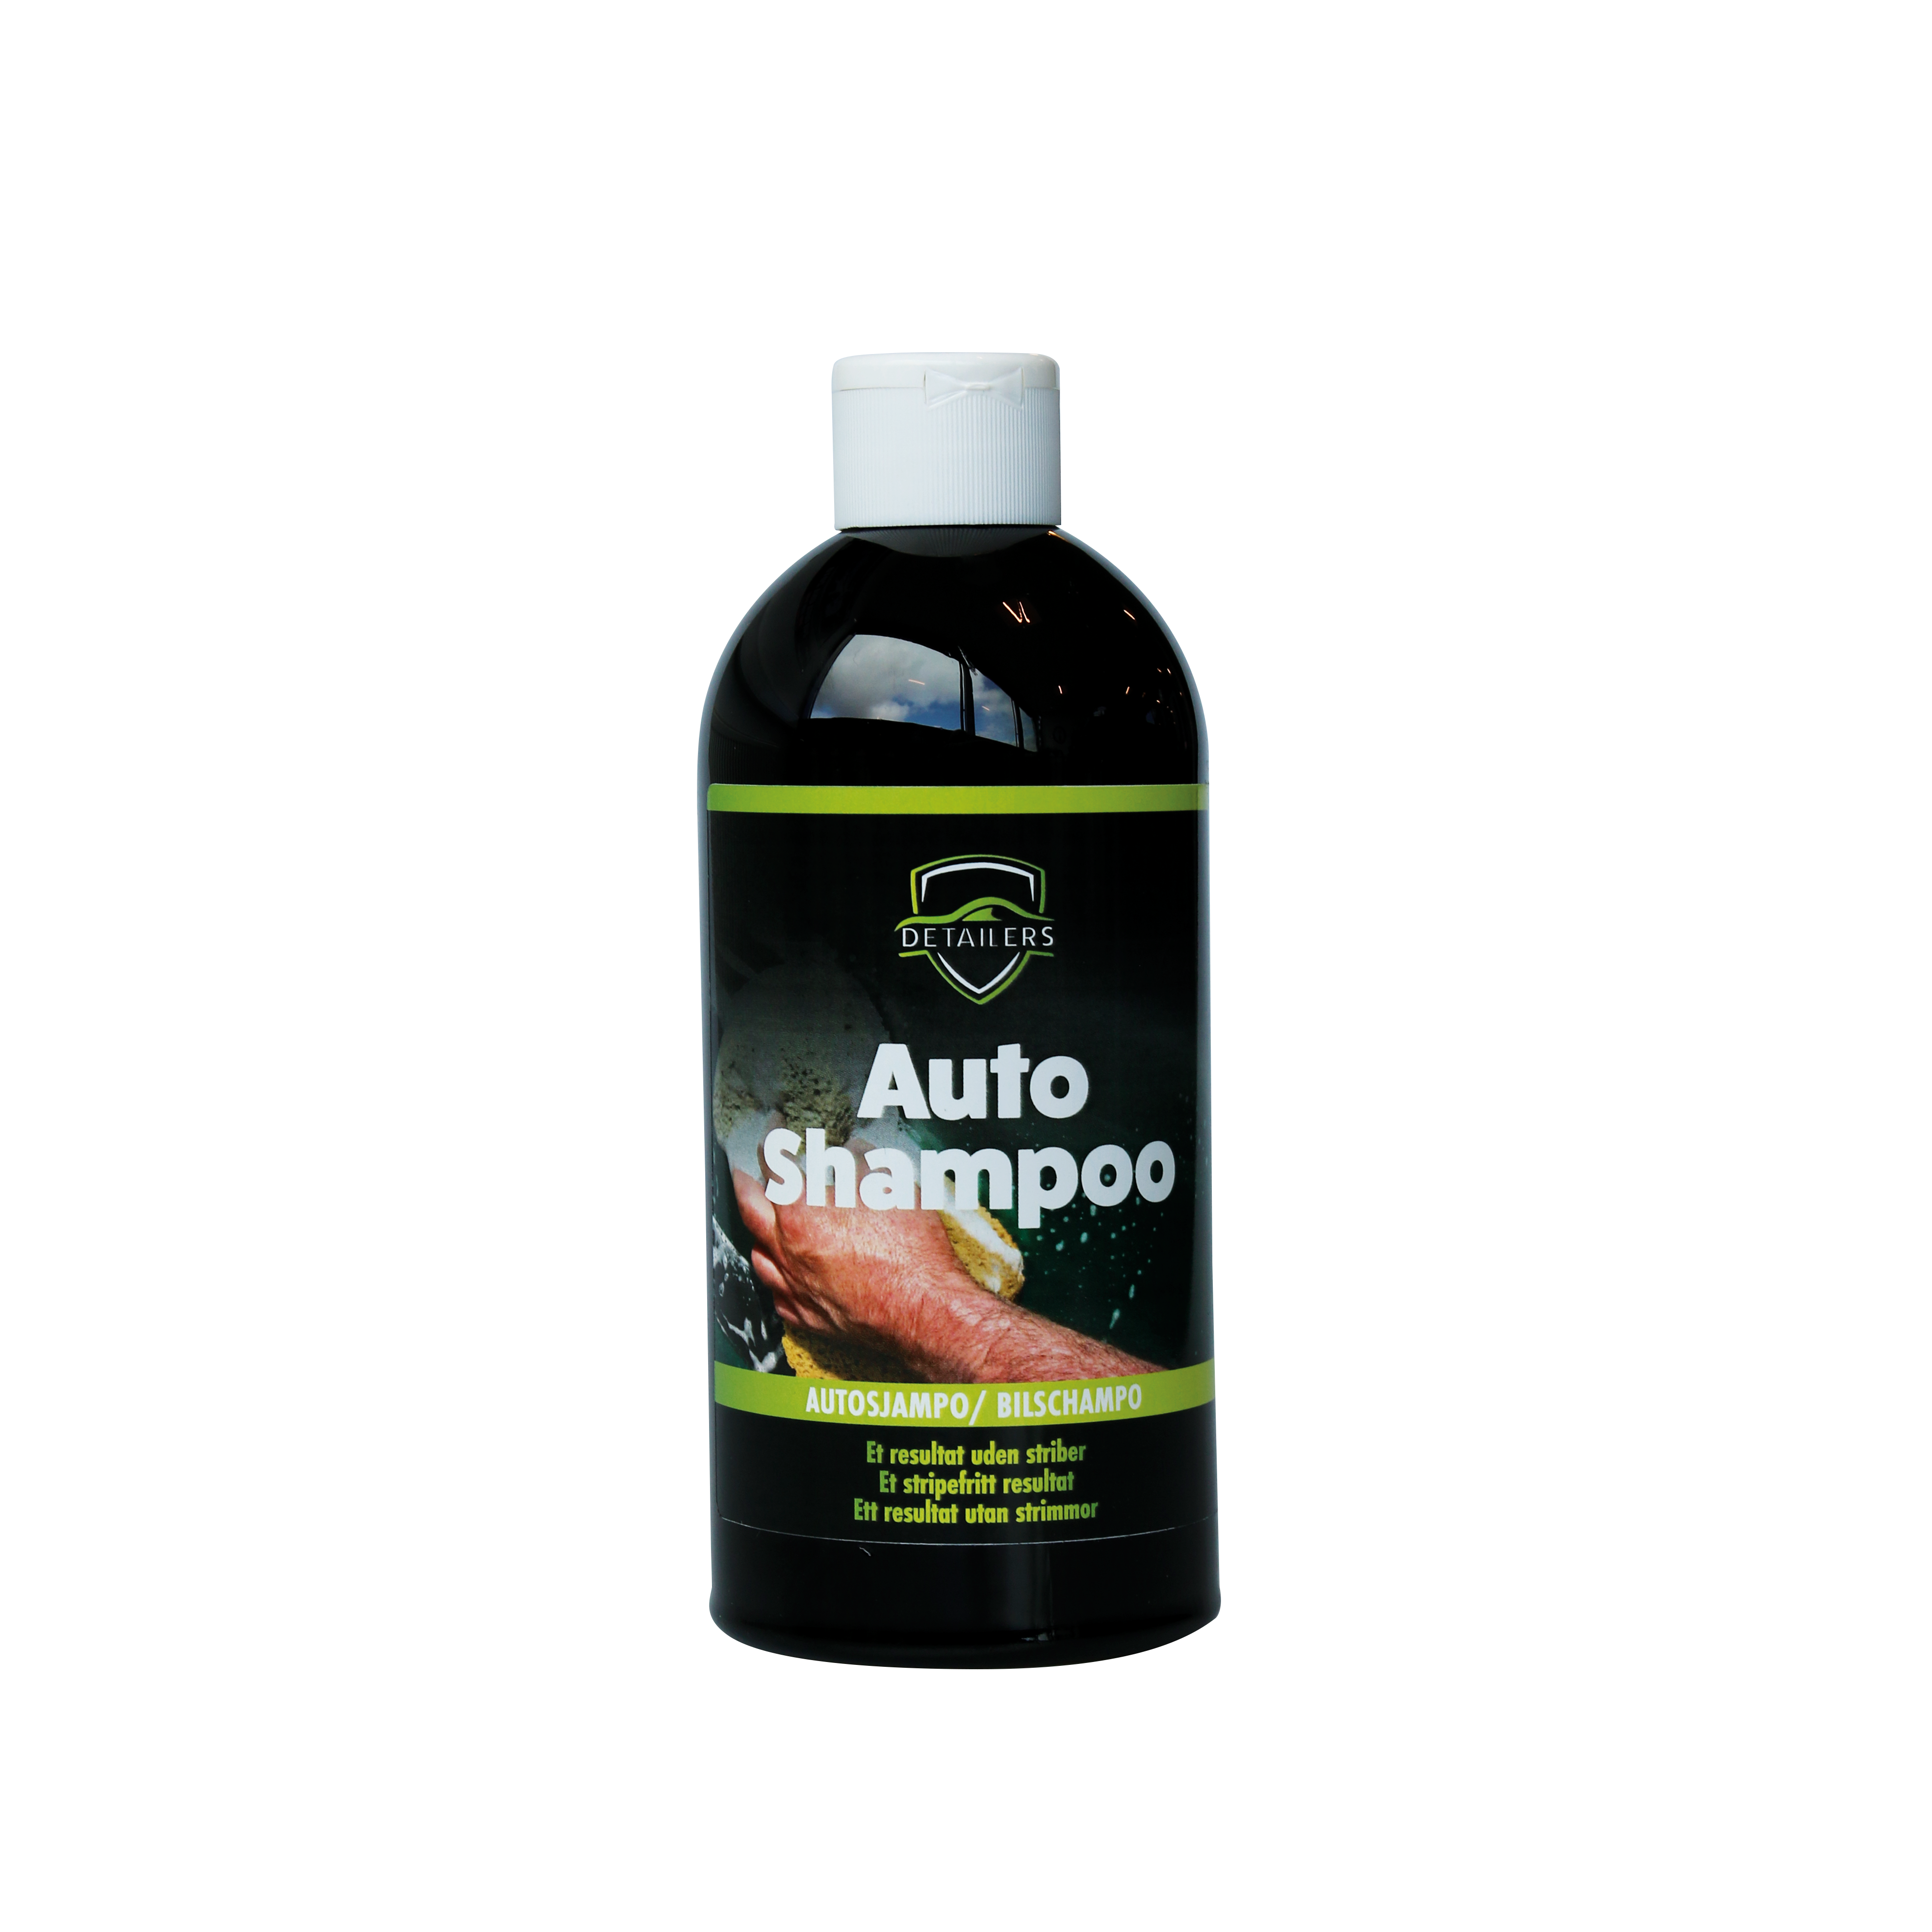 DETAILERS Auto Shampoo 500 ml. thumbnail